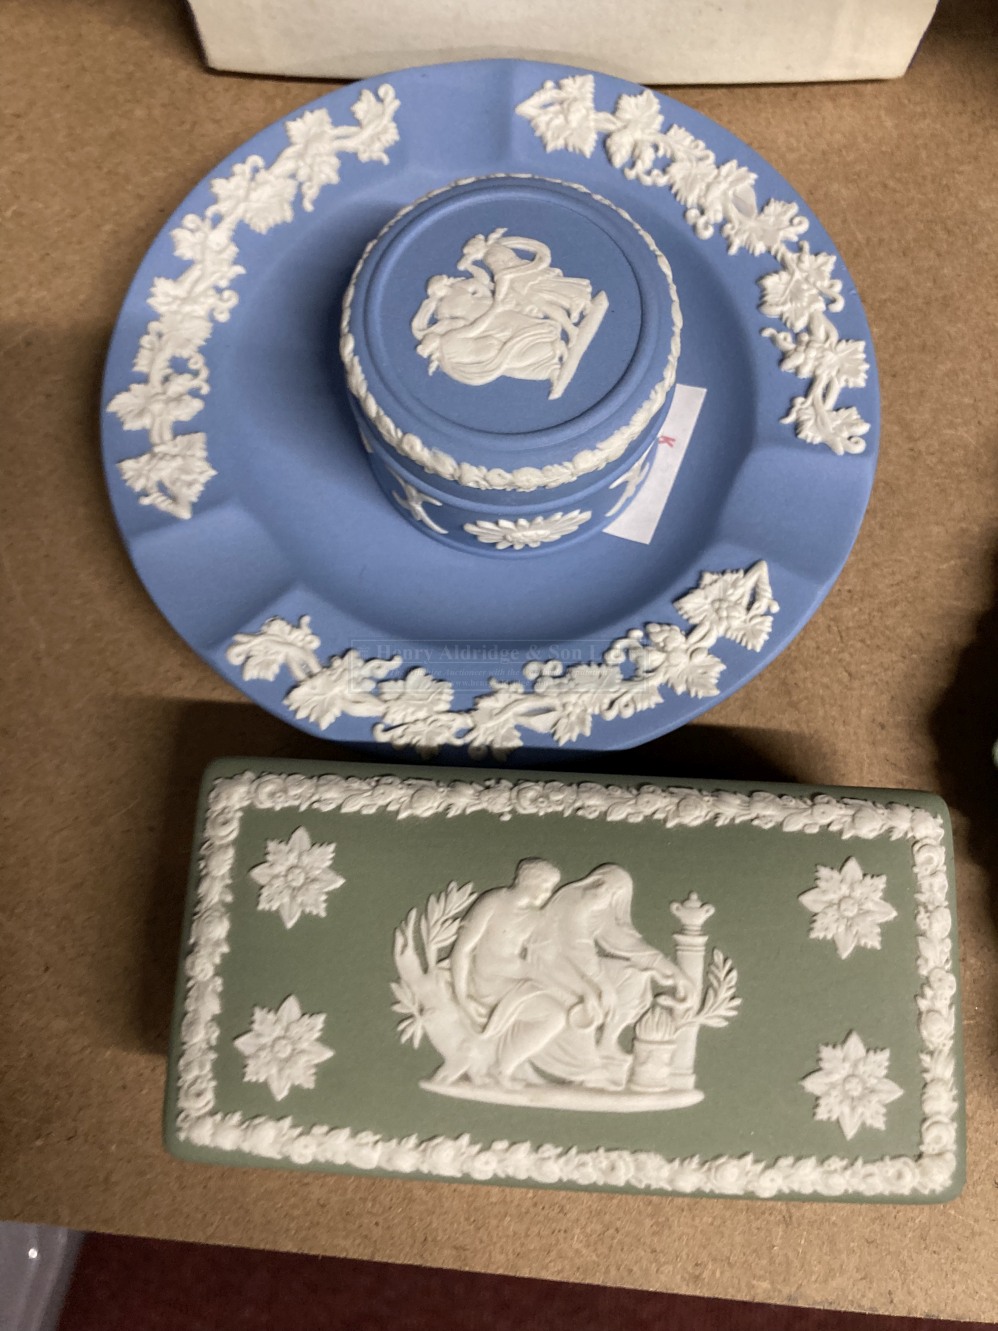 20th cent. Ceramics: Wedgwood Jasperware , blue/white round sweet dish, Princess Anne's Wedding, - Image 3 of 3